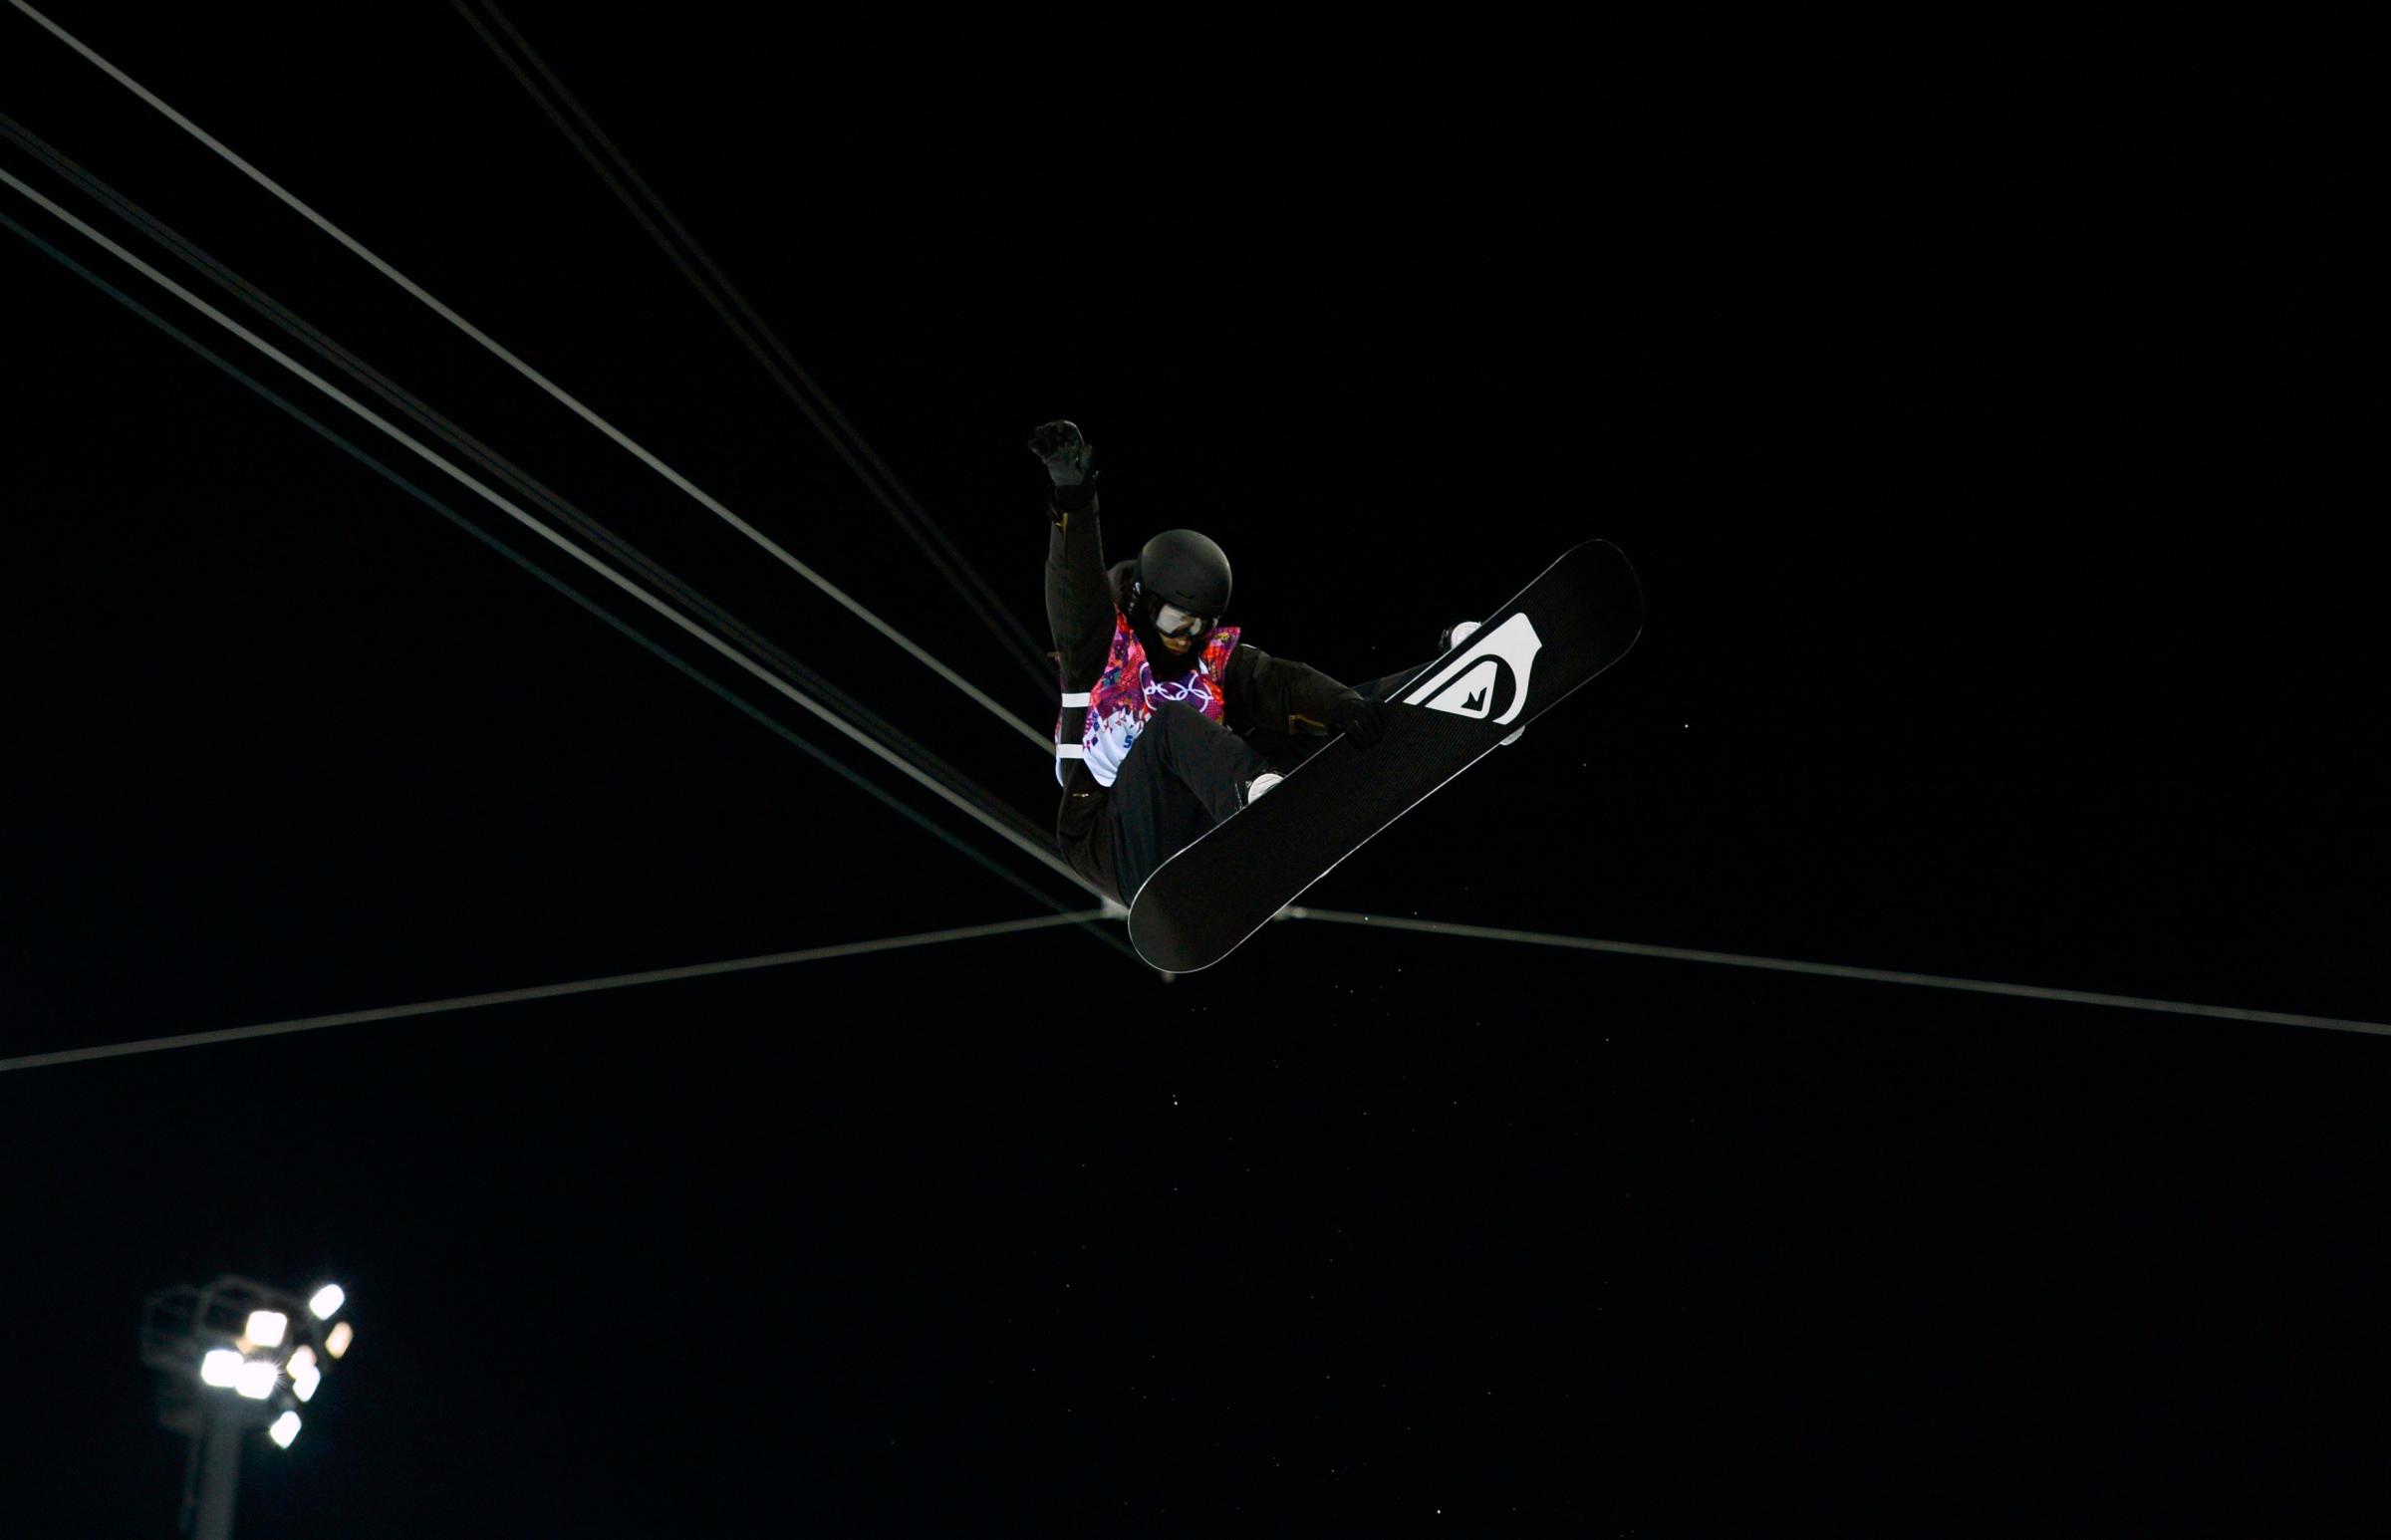 Switzerland's Iouri Podladtchikov performs a jump during the men's snowboard halfpipe semi-final even.